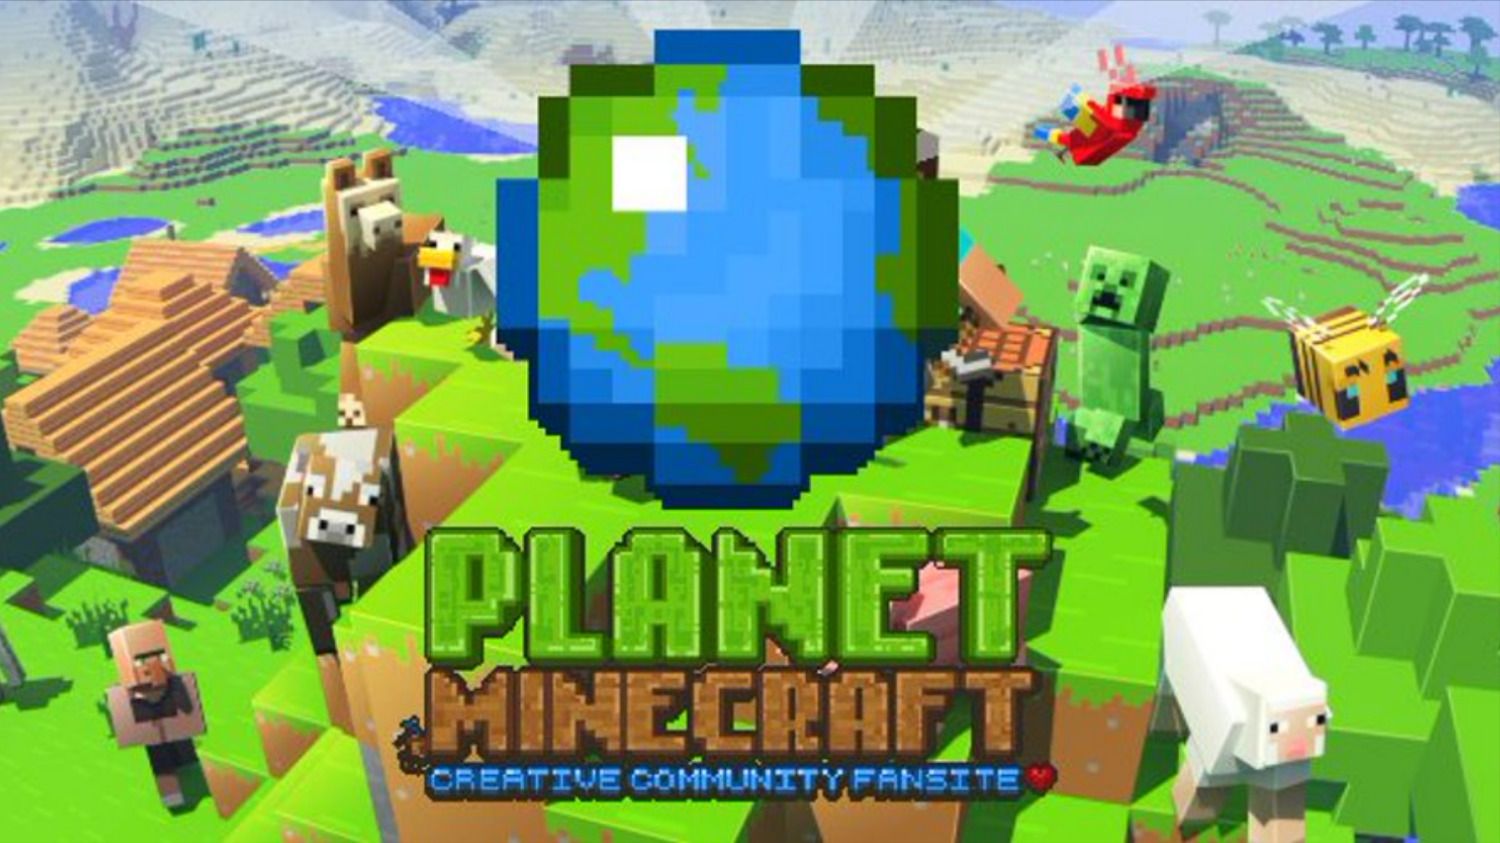 Plantaforma grande - Minecraft Wiki